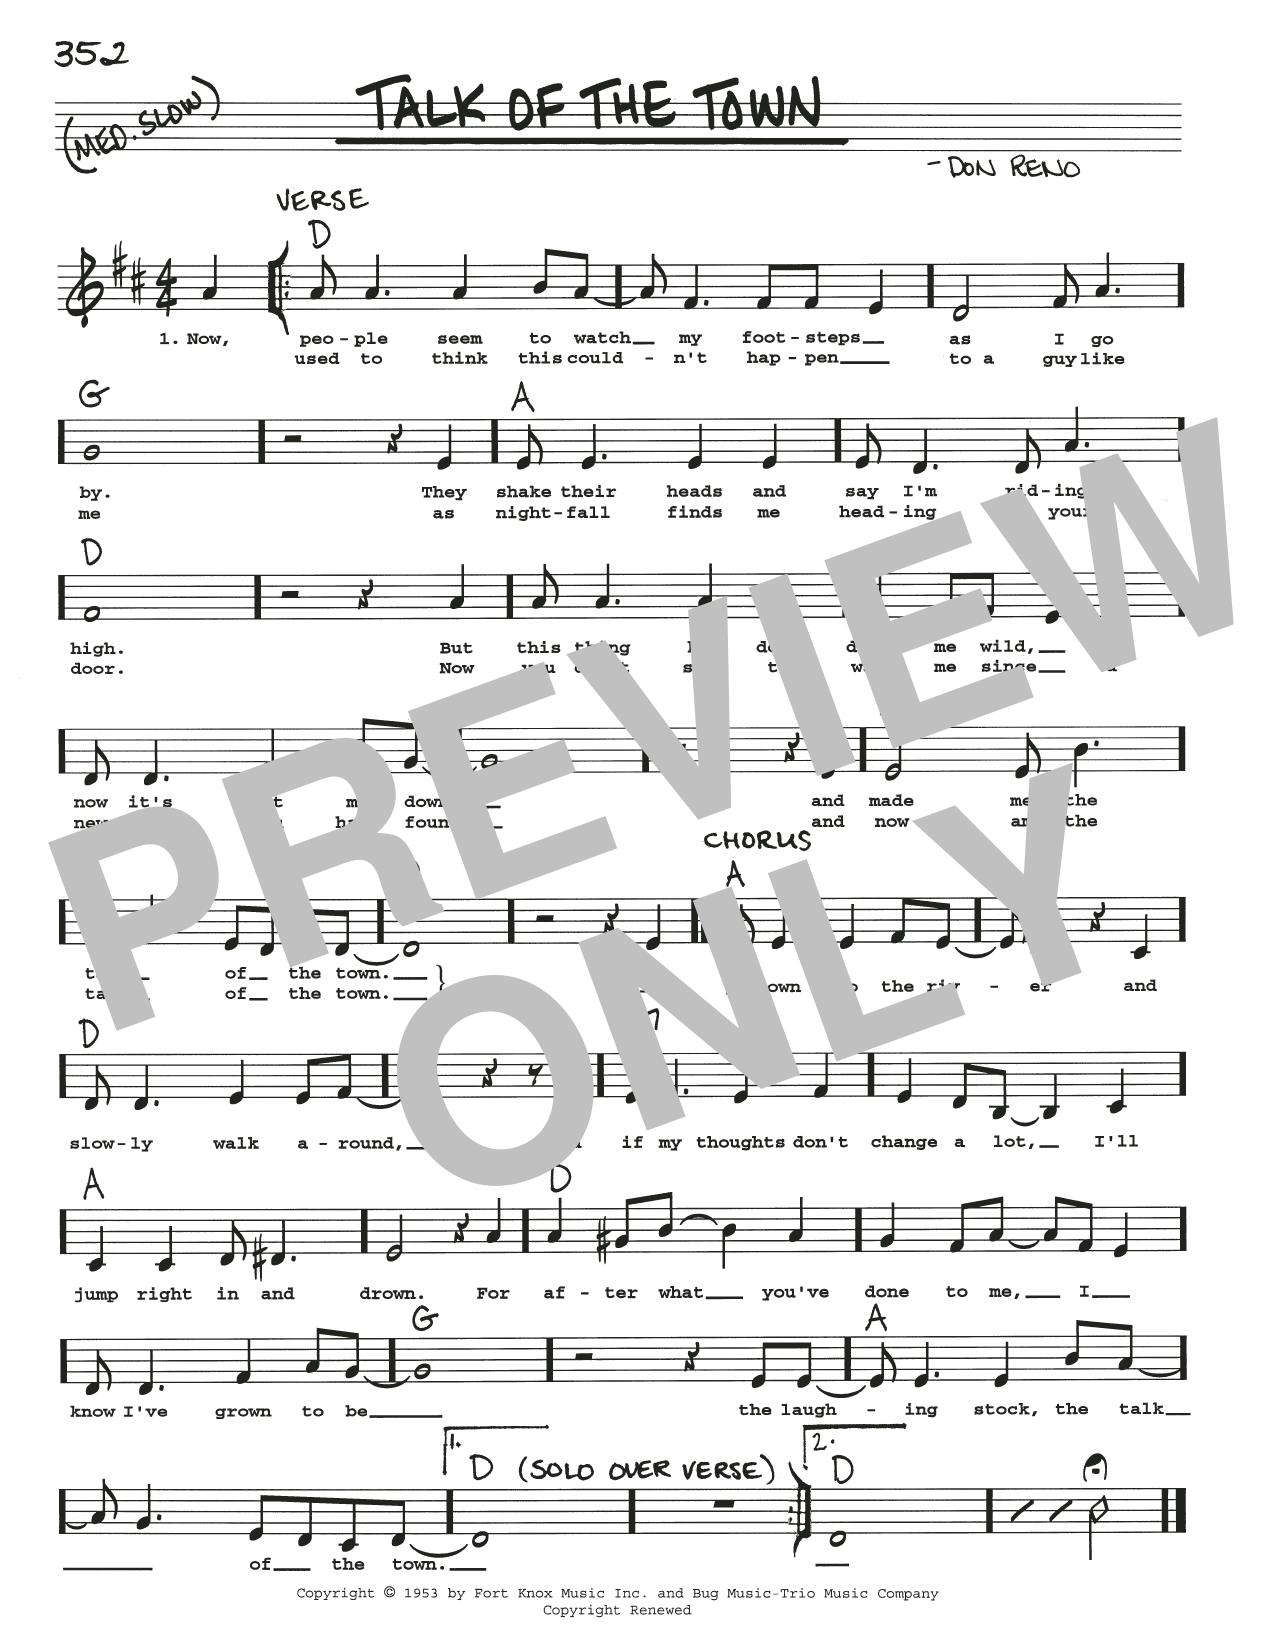 Don Reno Talk Of The Town Sheet Music Notes & Chords for Real Book – Melody, Lyrics & Chords - Download or Print PDF